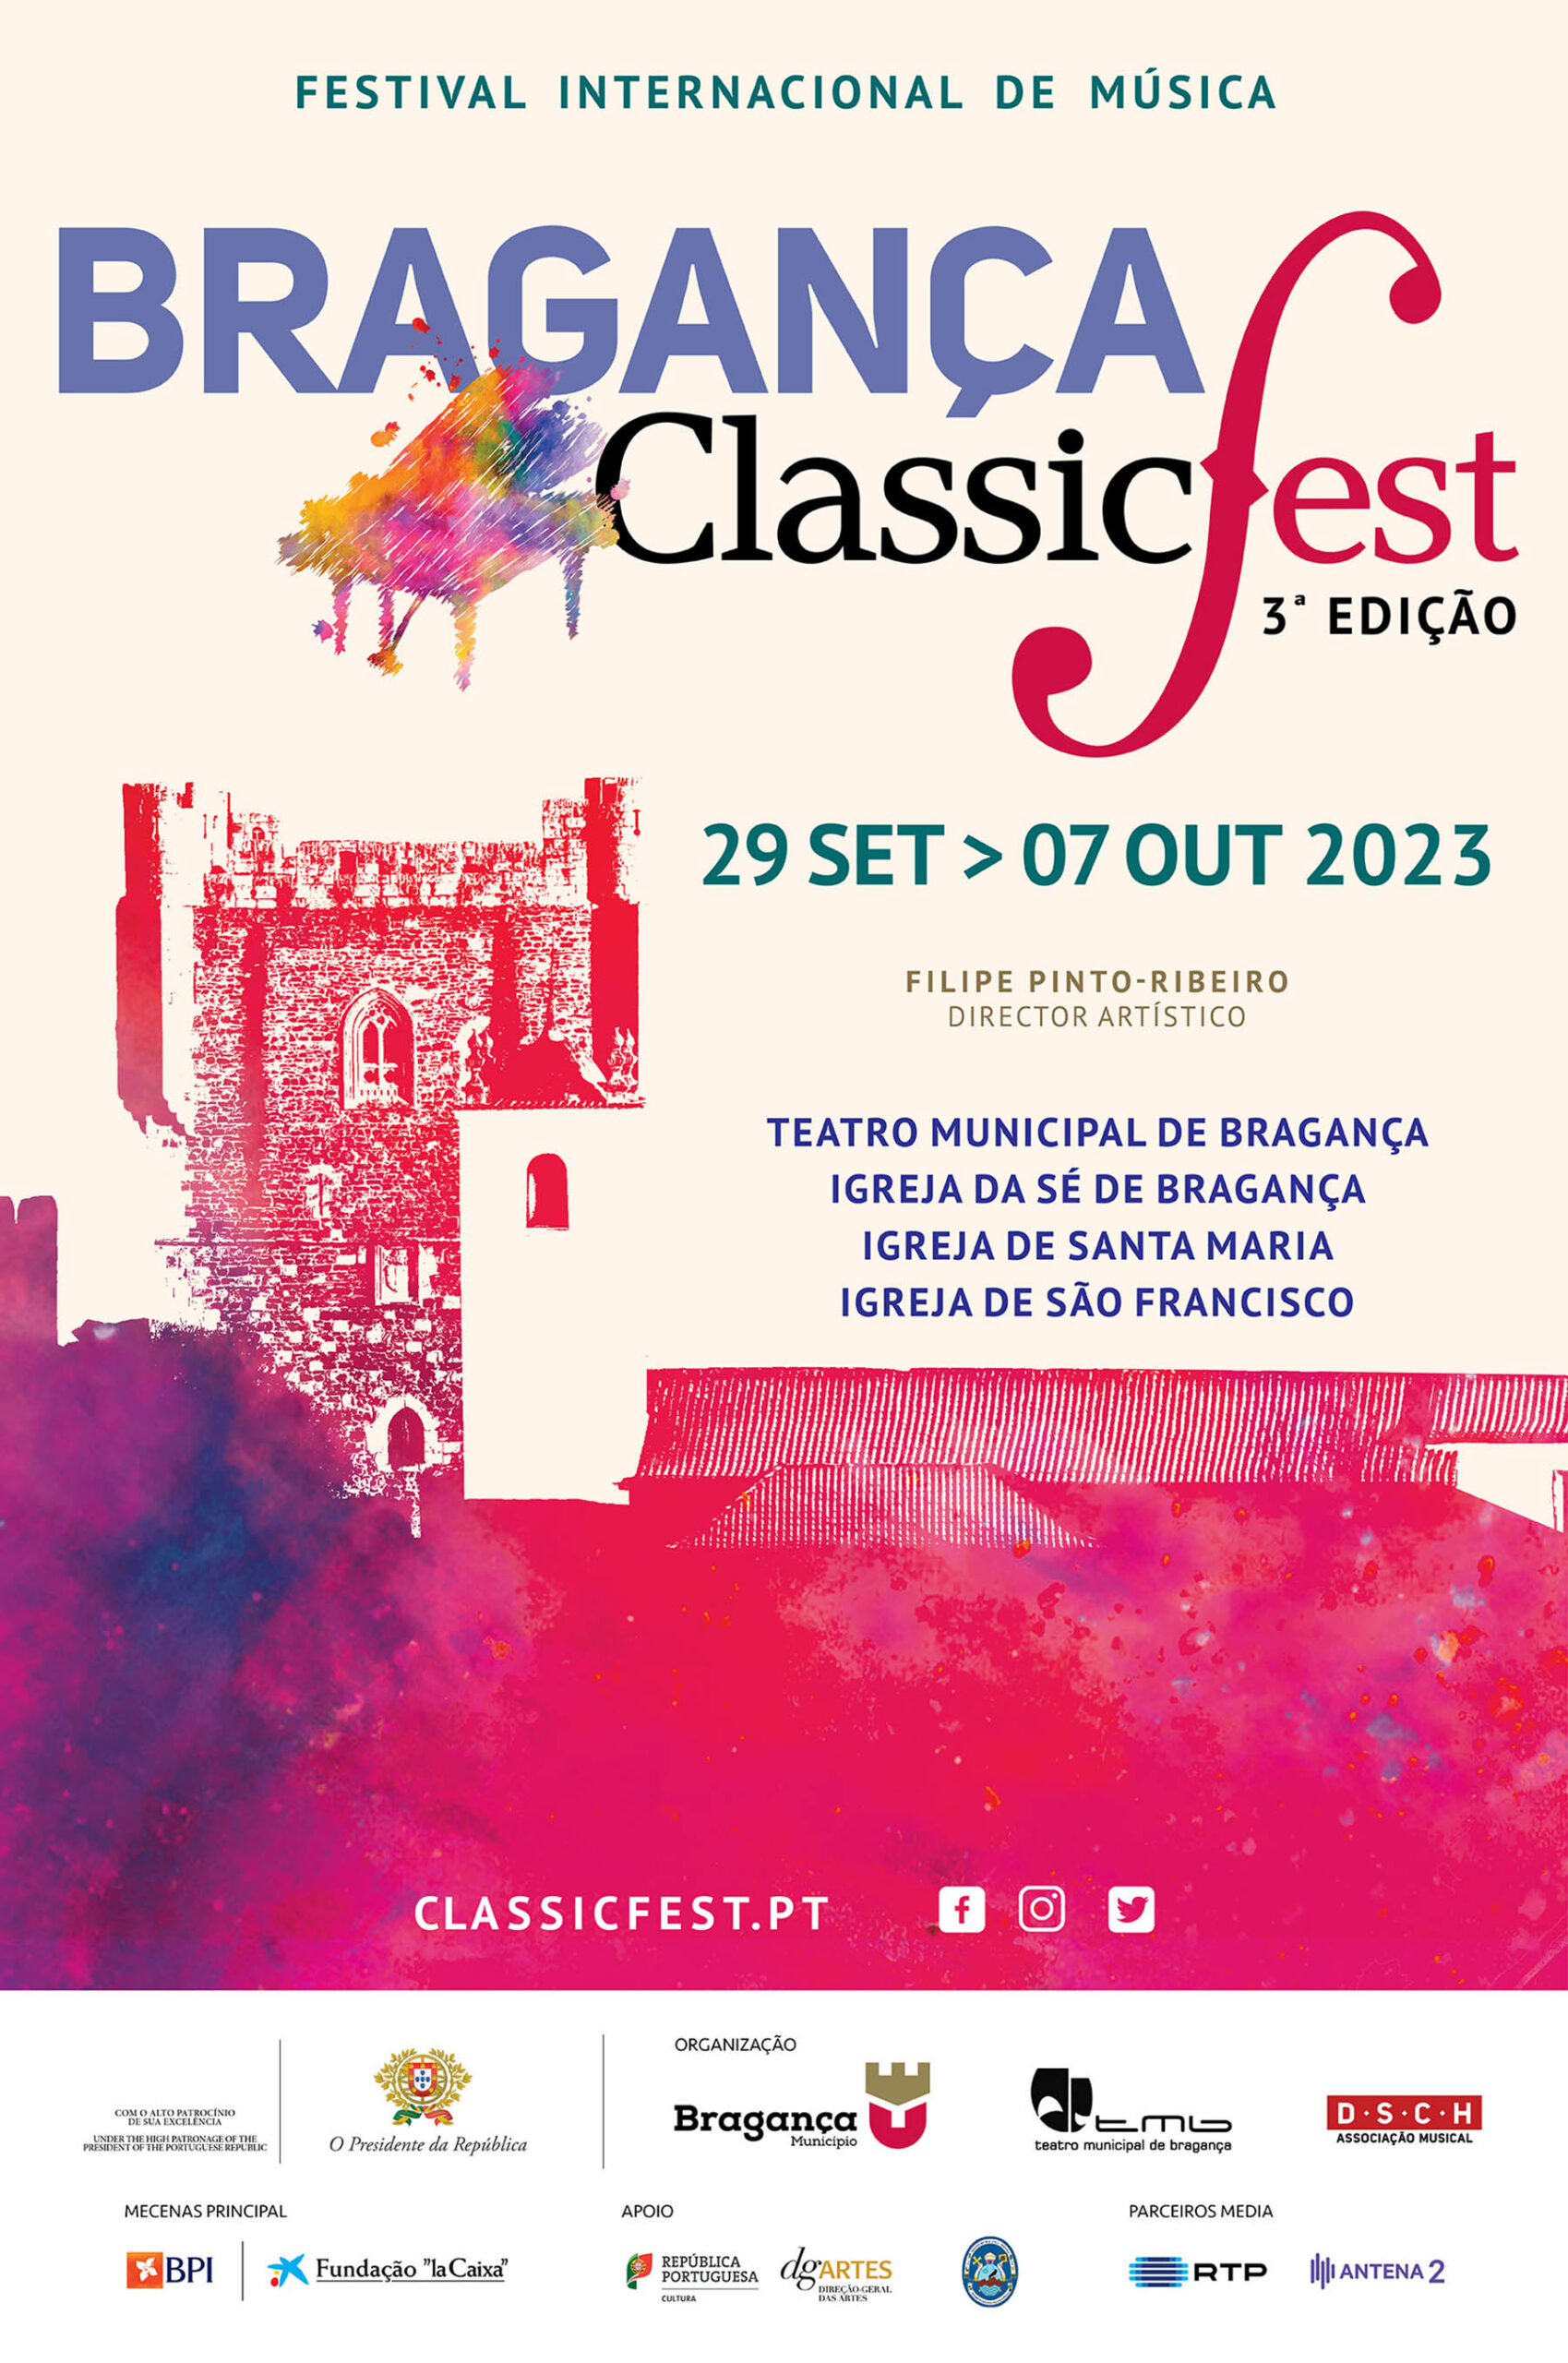 http://classicfest.pt/pt/introducao/